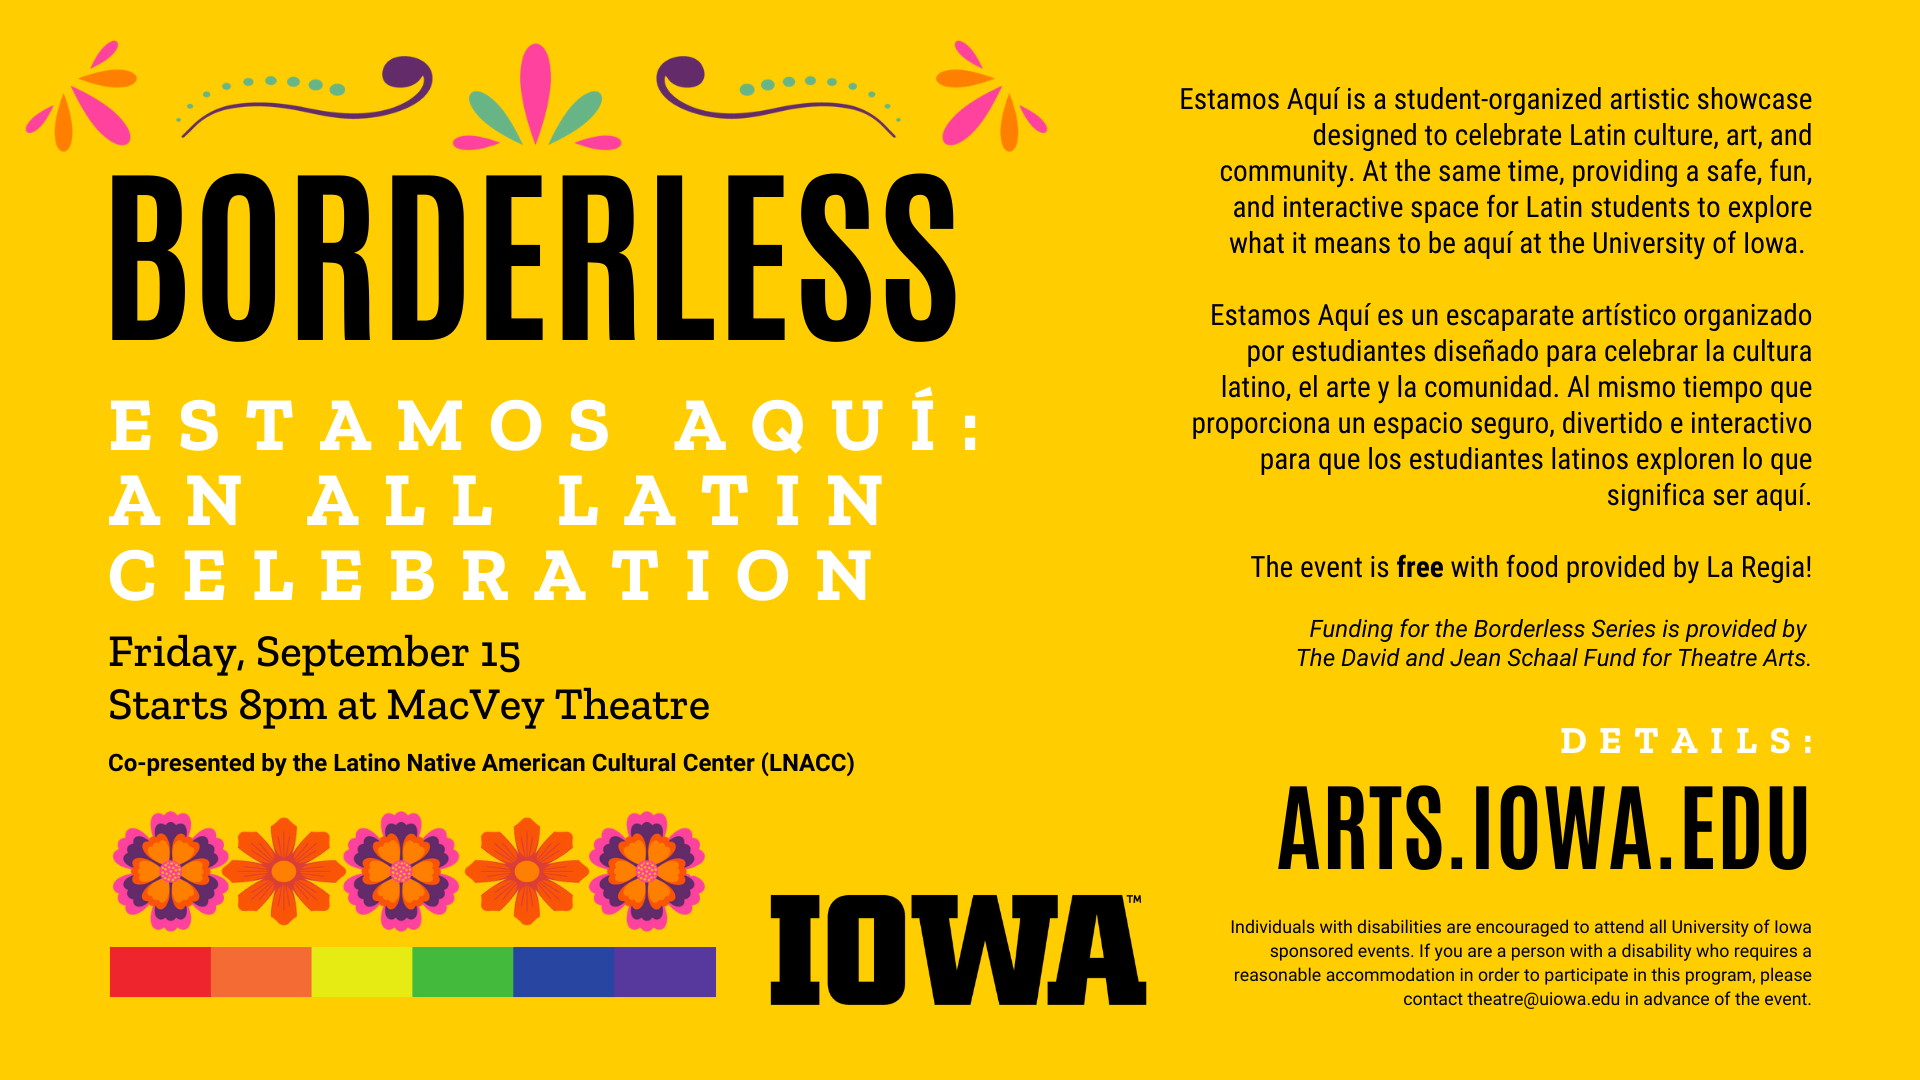 Borderless Estamos Aqui: An All Latin Celebration on Friday, September 15 starts at 8pm in MacVey Theatre